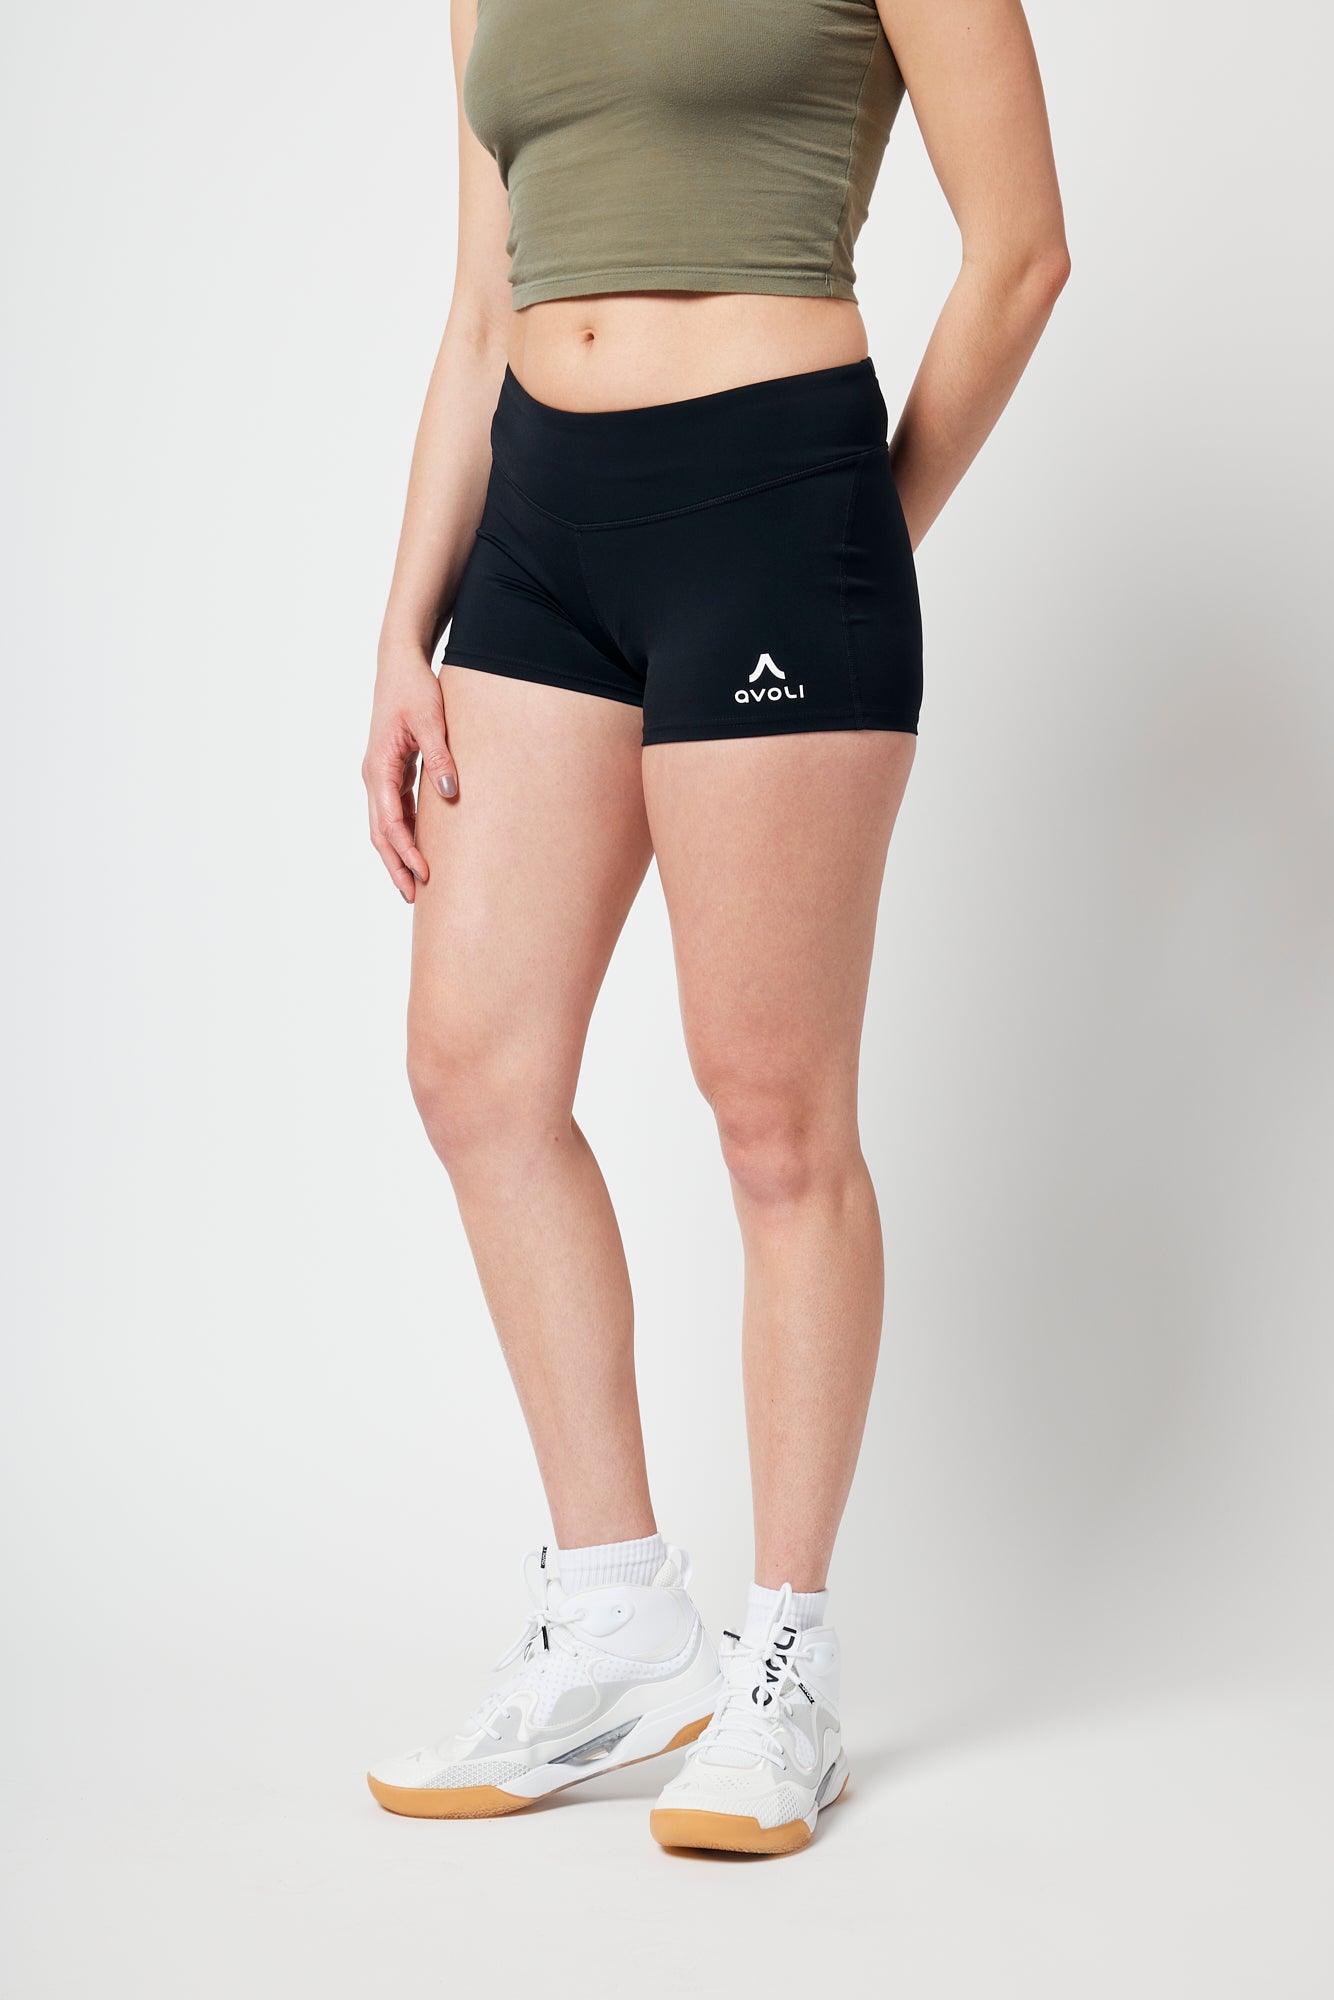 Volleyball Spandex Shorts 3"